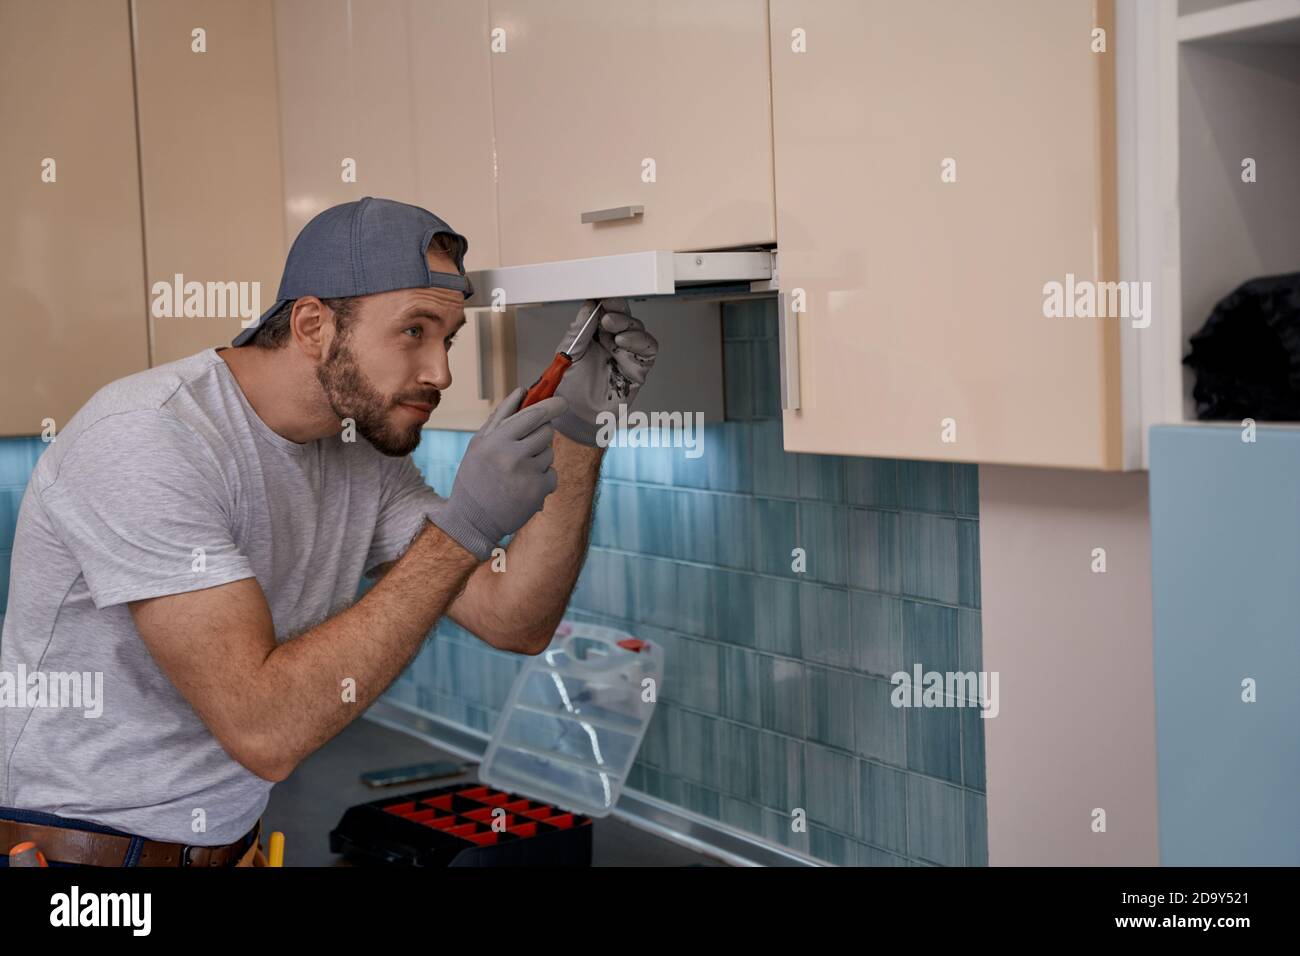 Young caucasian repairman installing kitchen hood using screwdriver Stock Photo